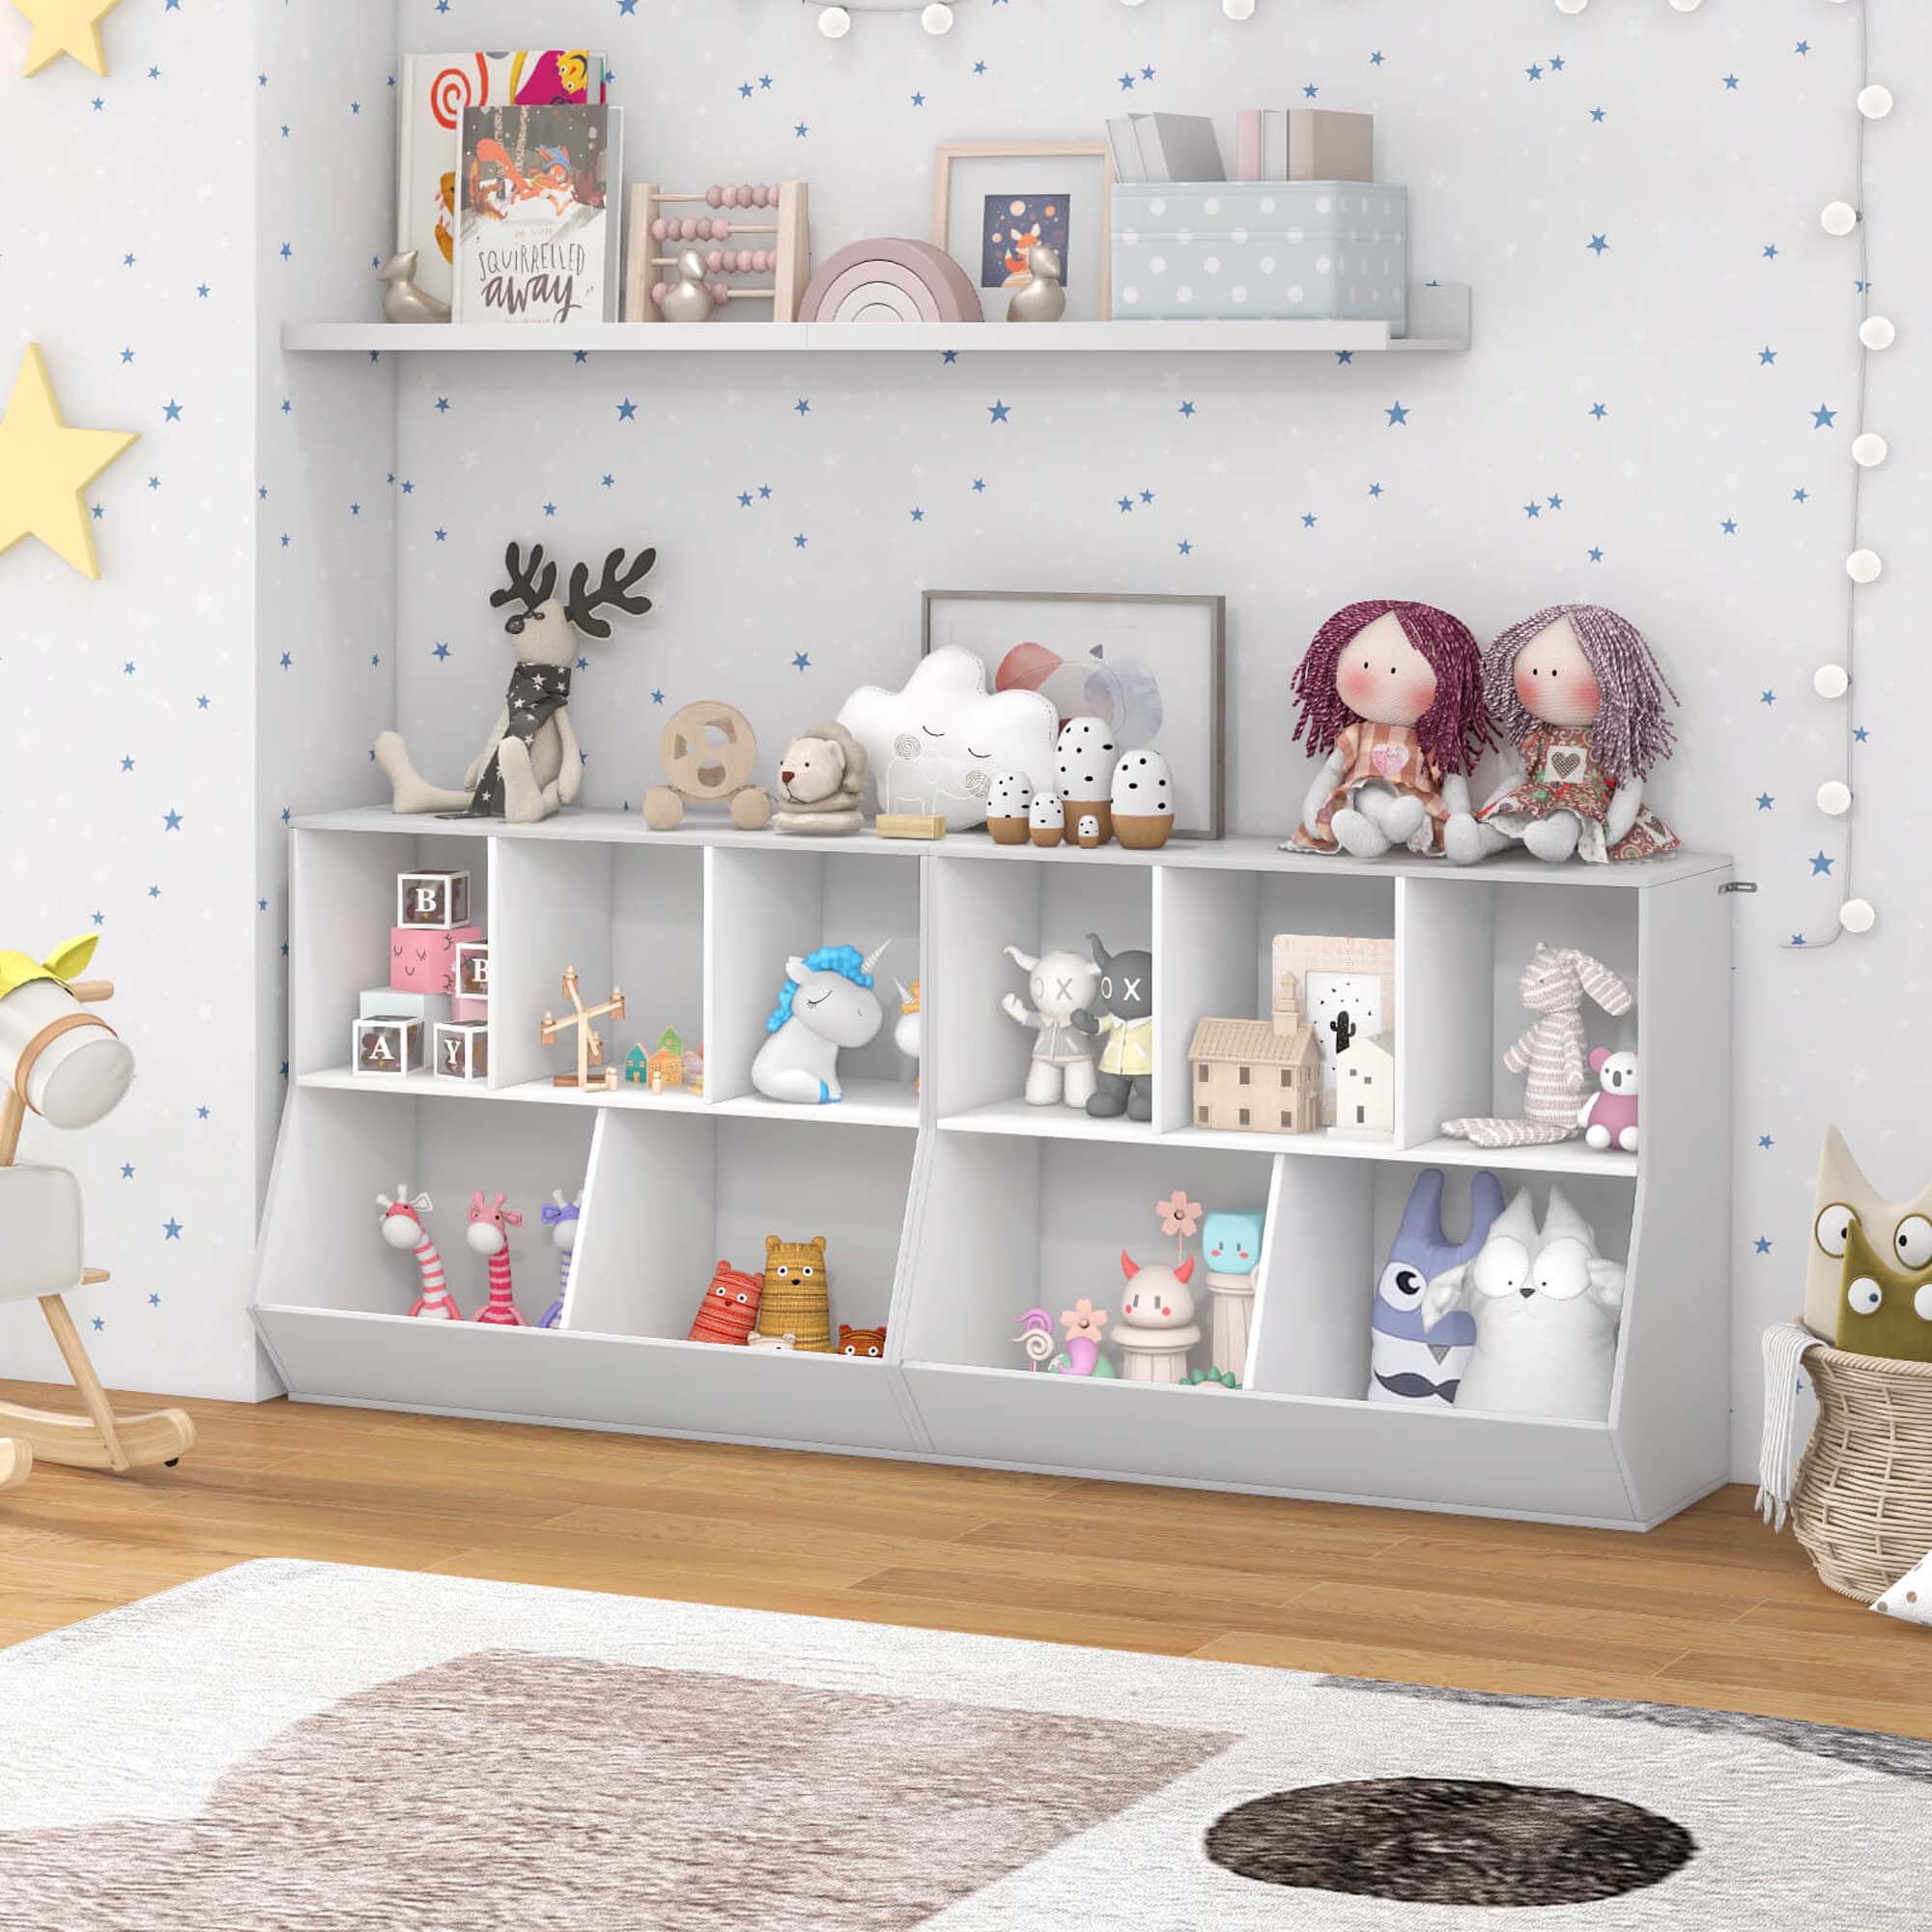 Costway 5-Cubby Kids Toy Storage Organizer Wooden Bookshelf Display Cabinet White - image 4 of 10